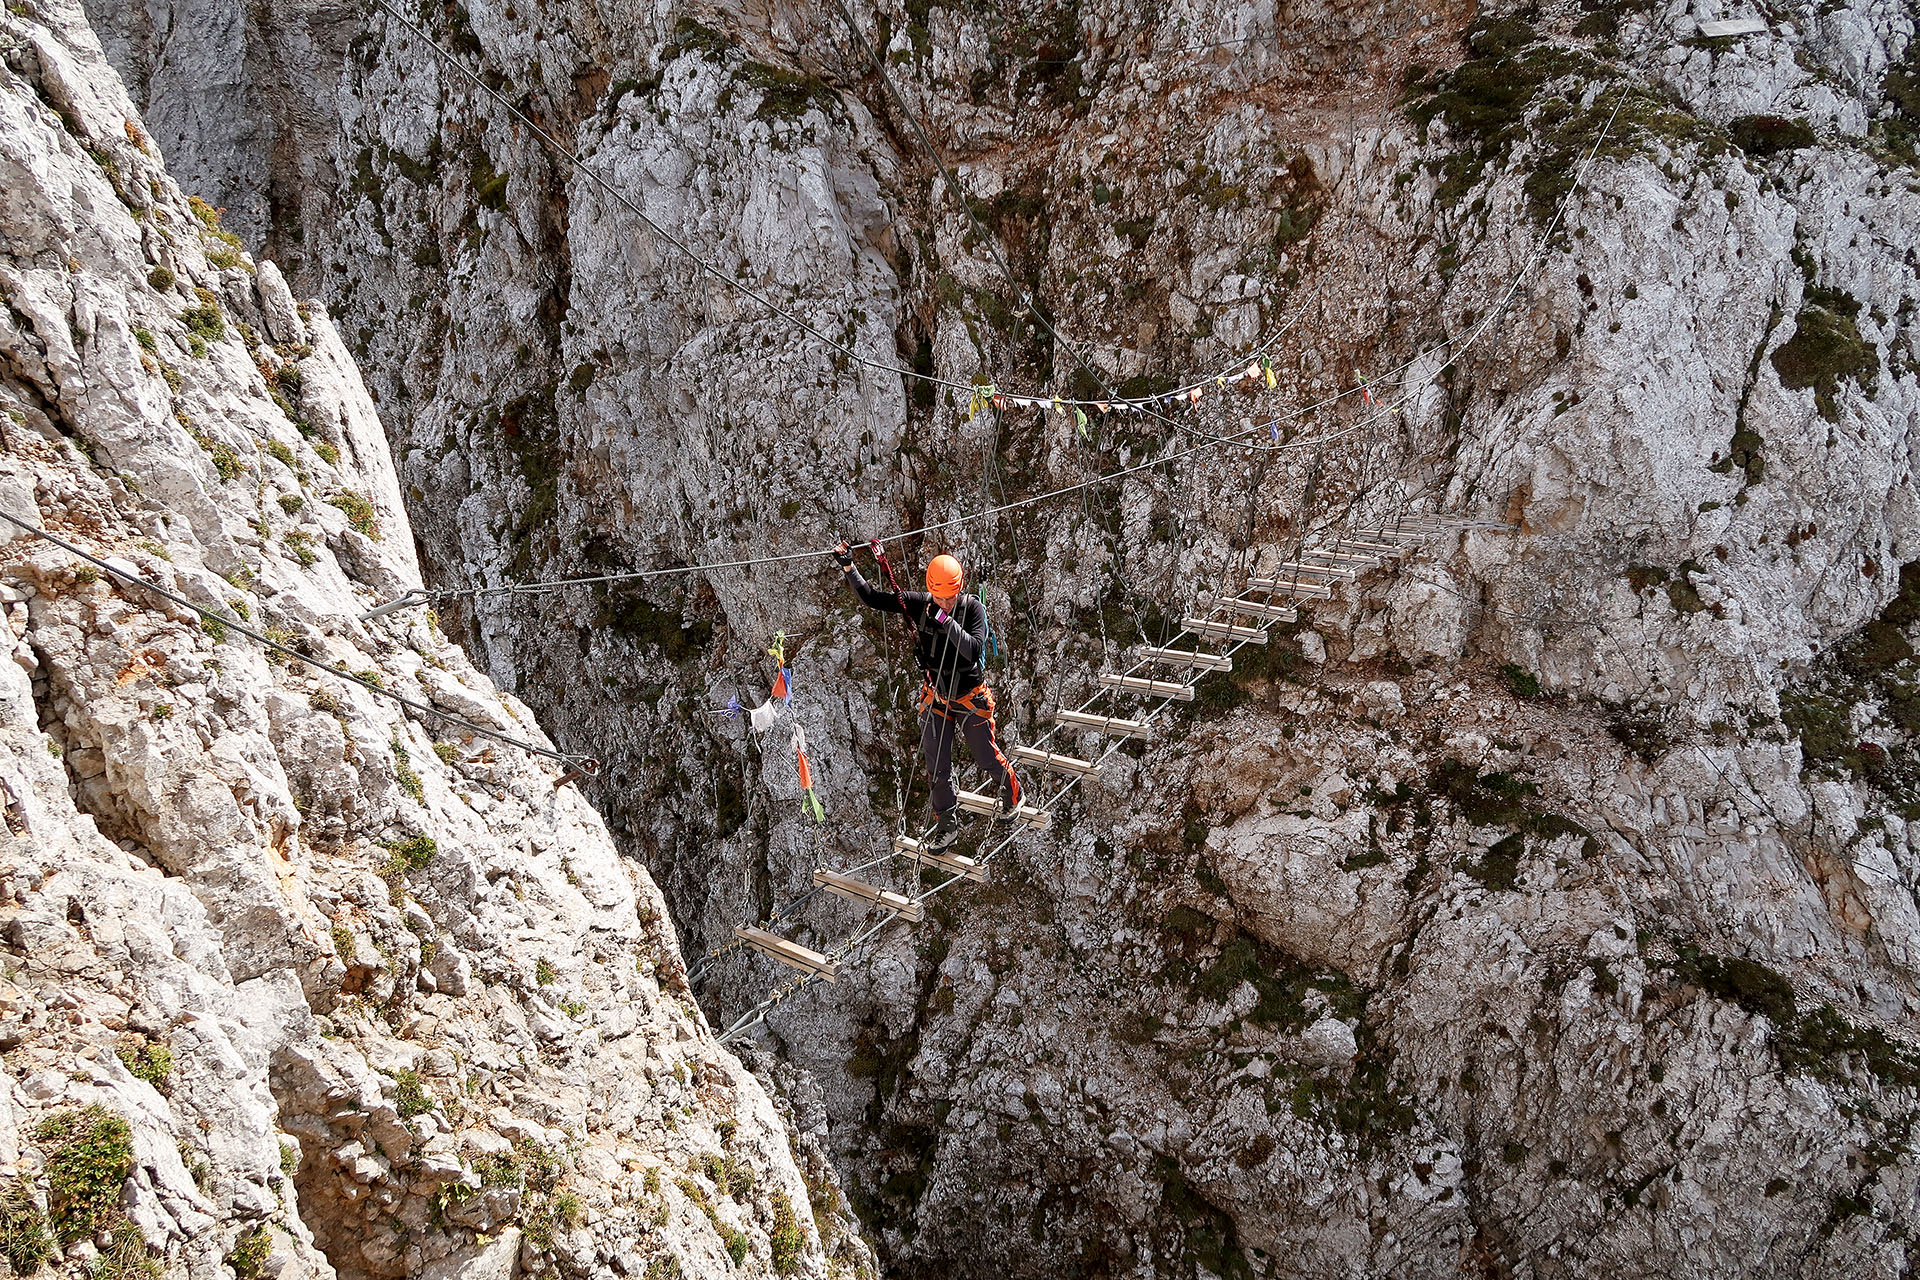 guided ascent on via ferrata cjajnik and kosutnikov turn